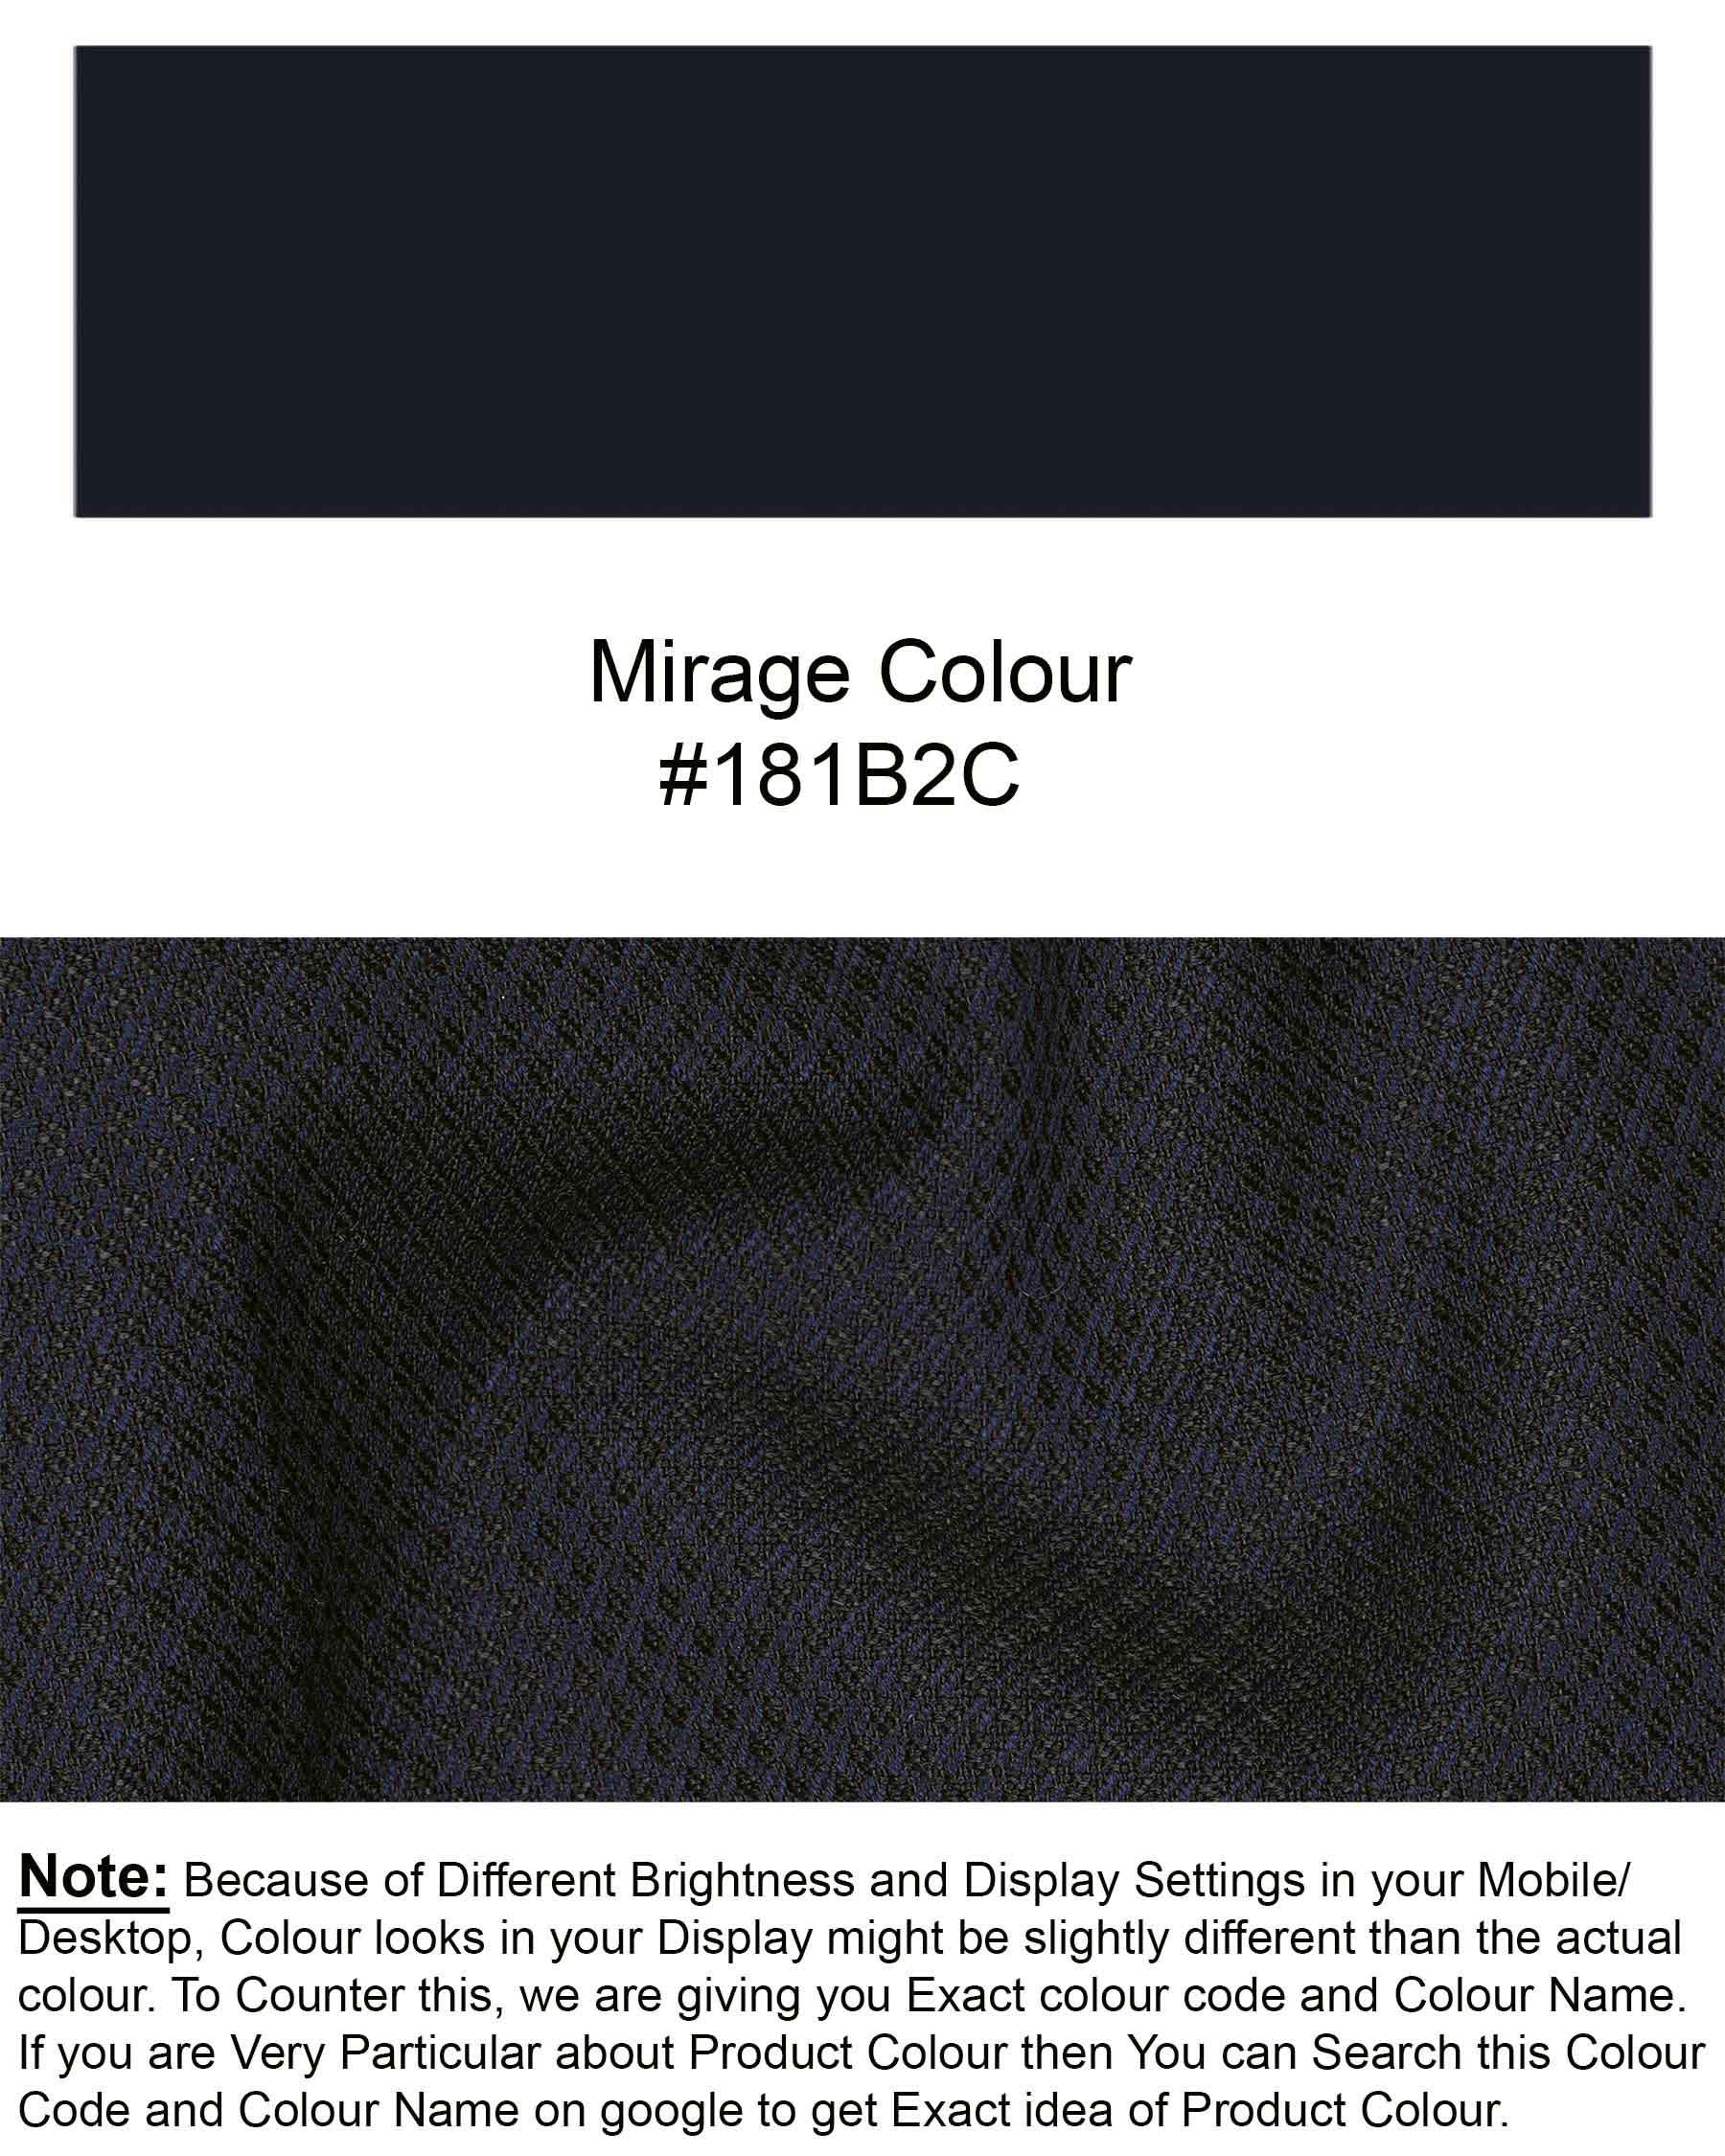 Mirage Blue Diamond Textured Single Breasted Suit ST1911-SB-36, ST1911-SB-38, ST1911-SB-40, ST1911-SB-42, ST1911-SB-44, ST1911-SB-46, ST1911-SB-48, ST1911-SB-50, ST1911-SB-52, ST1911-SB-54, ST1911-SB-56, ST1911-SB-58, ST1911-SB-60